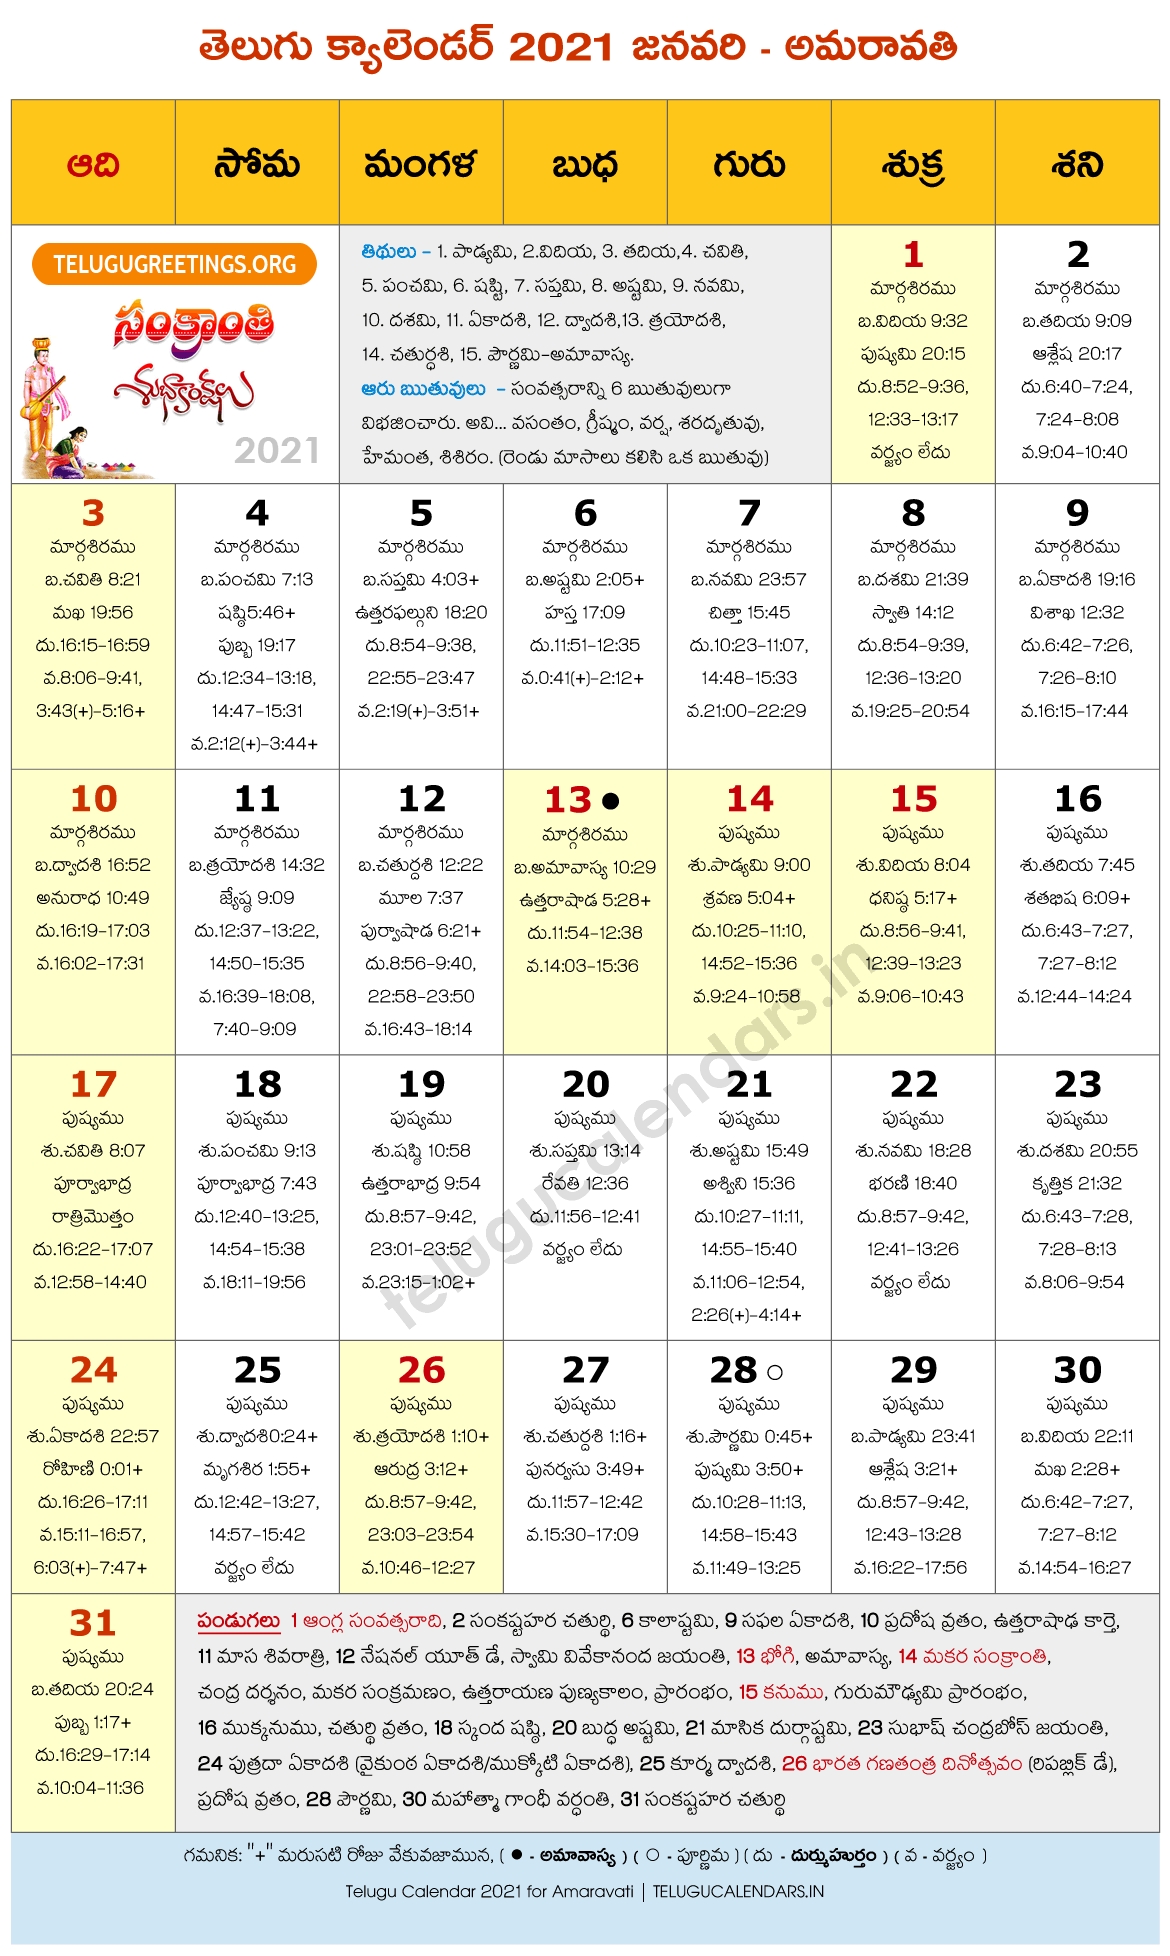 Amaravati 2021 January Telugu Calendar | Telugu Calendars Telugu Calendar 2021 October Andhra Pradesh